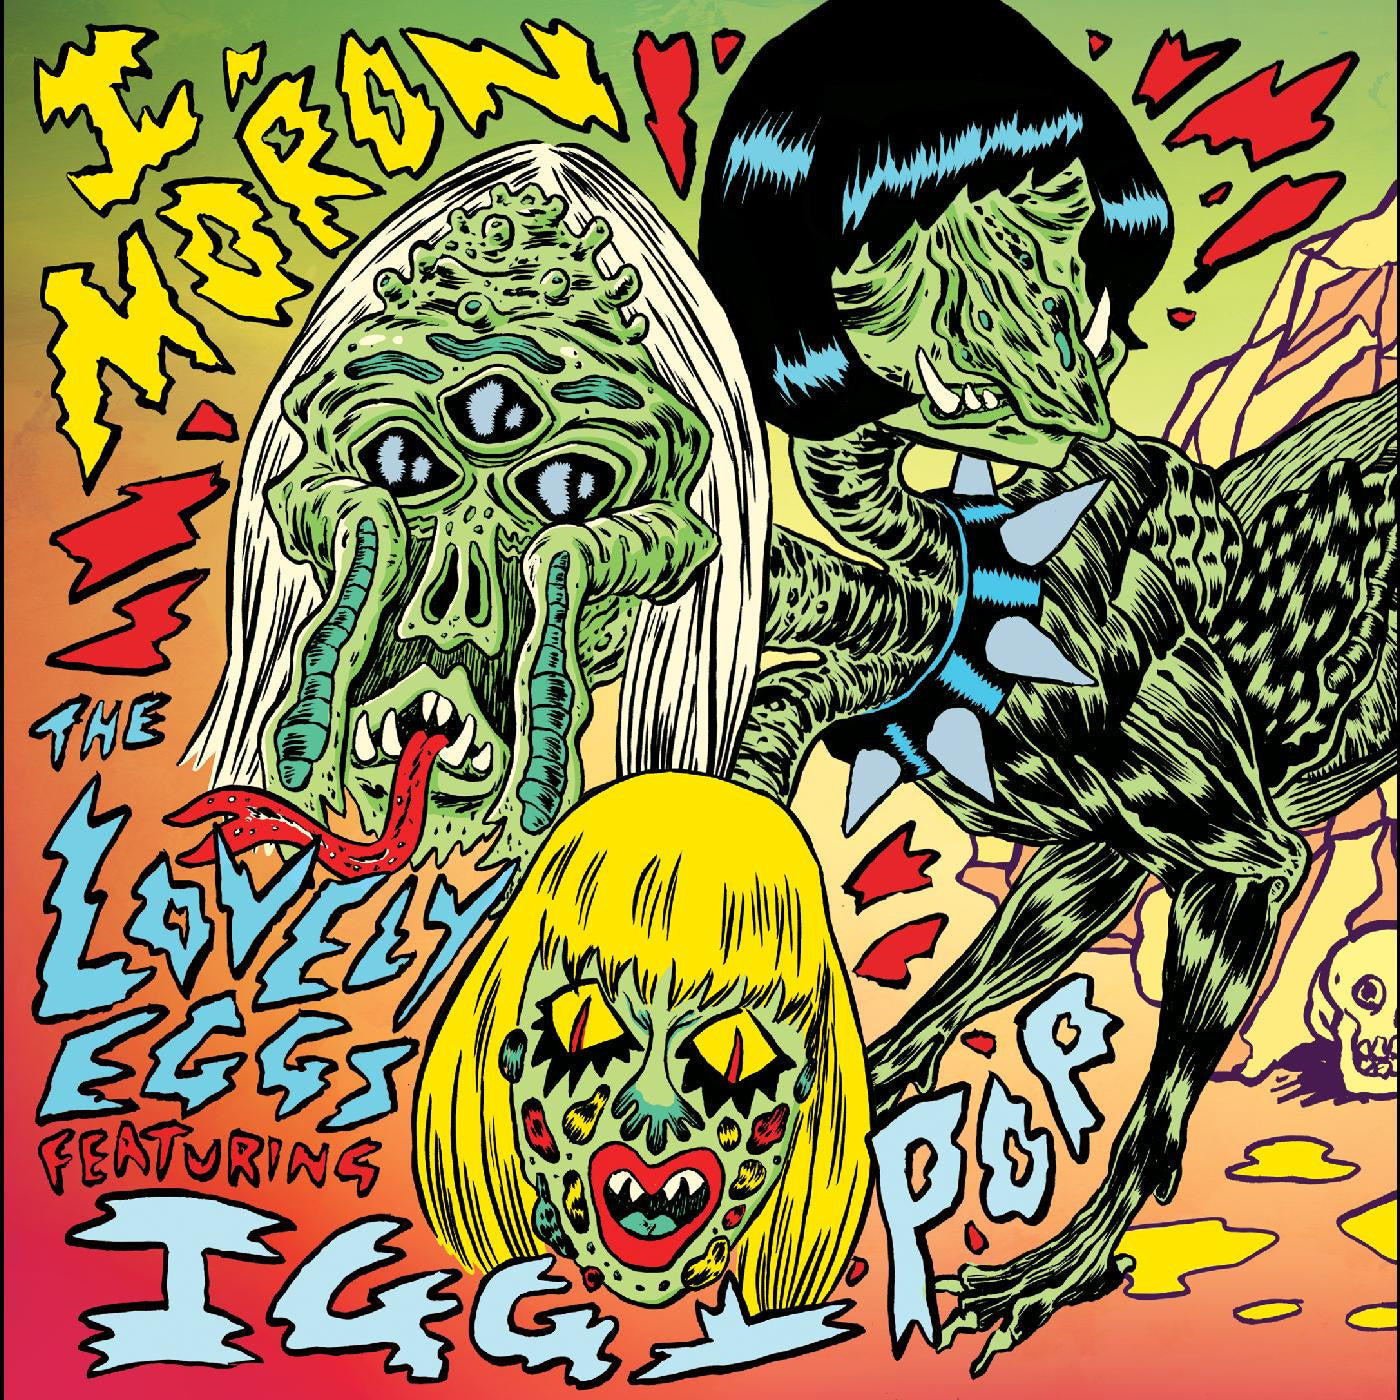 Lovely Eggs, The featuring Iggy Pop– "I, Moron" / "Dum Dum Boys" [IMPORT PINK VINYL] – New 7"